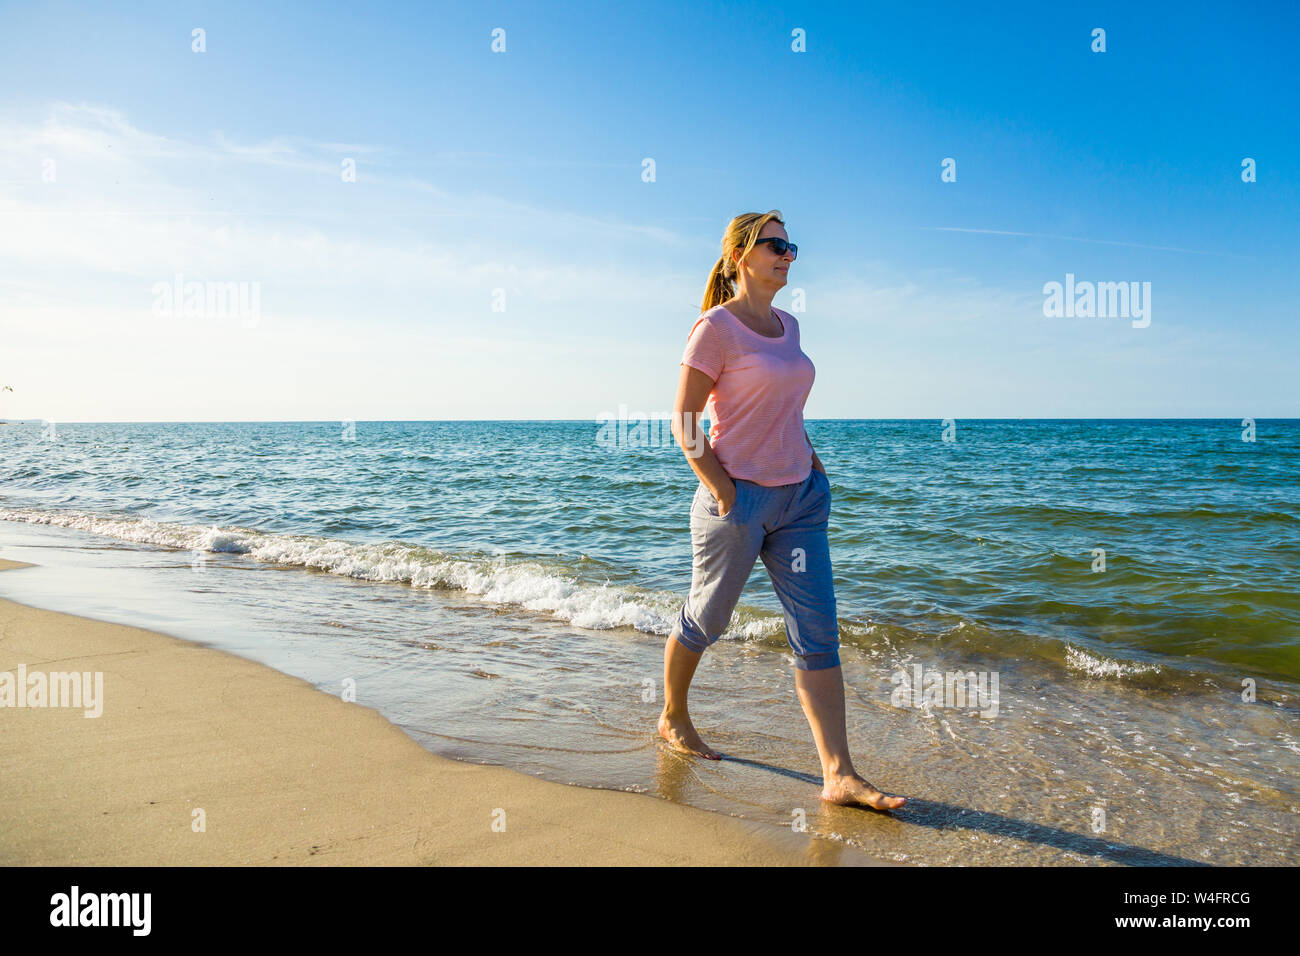 Woman waking on beach Stock Photo